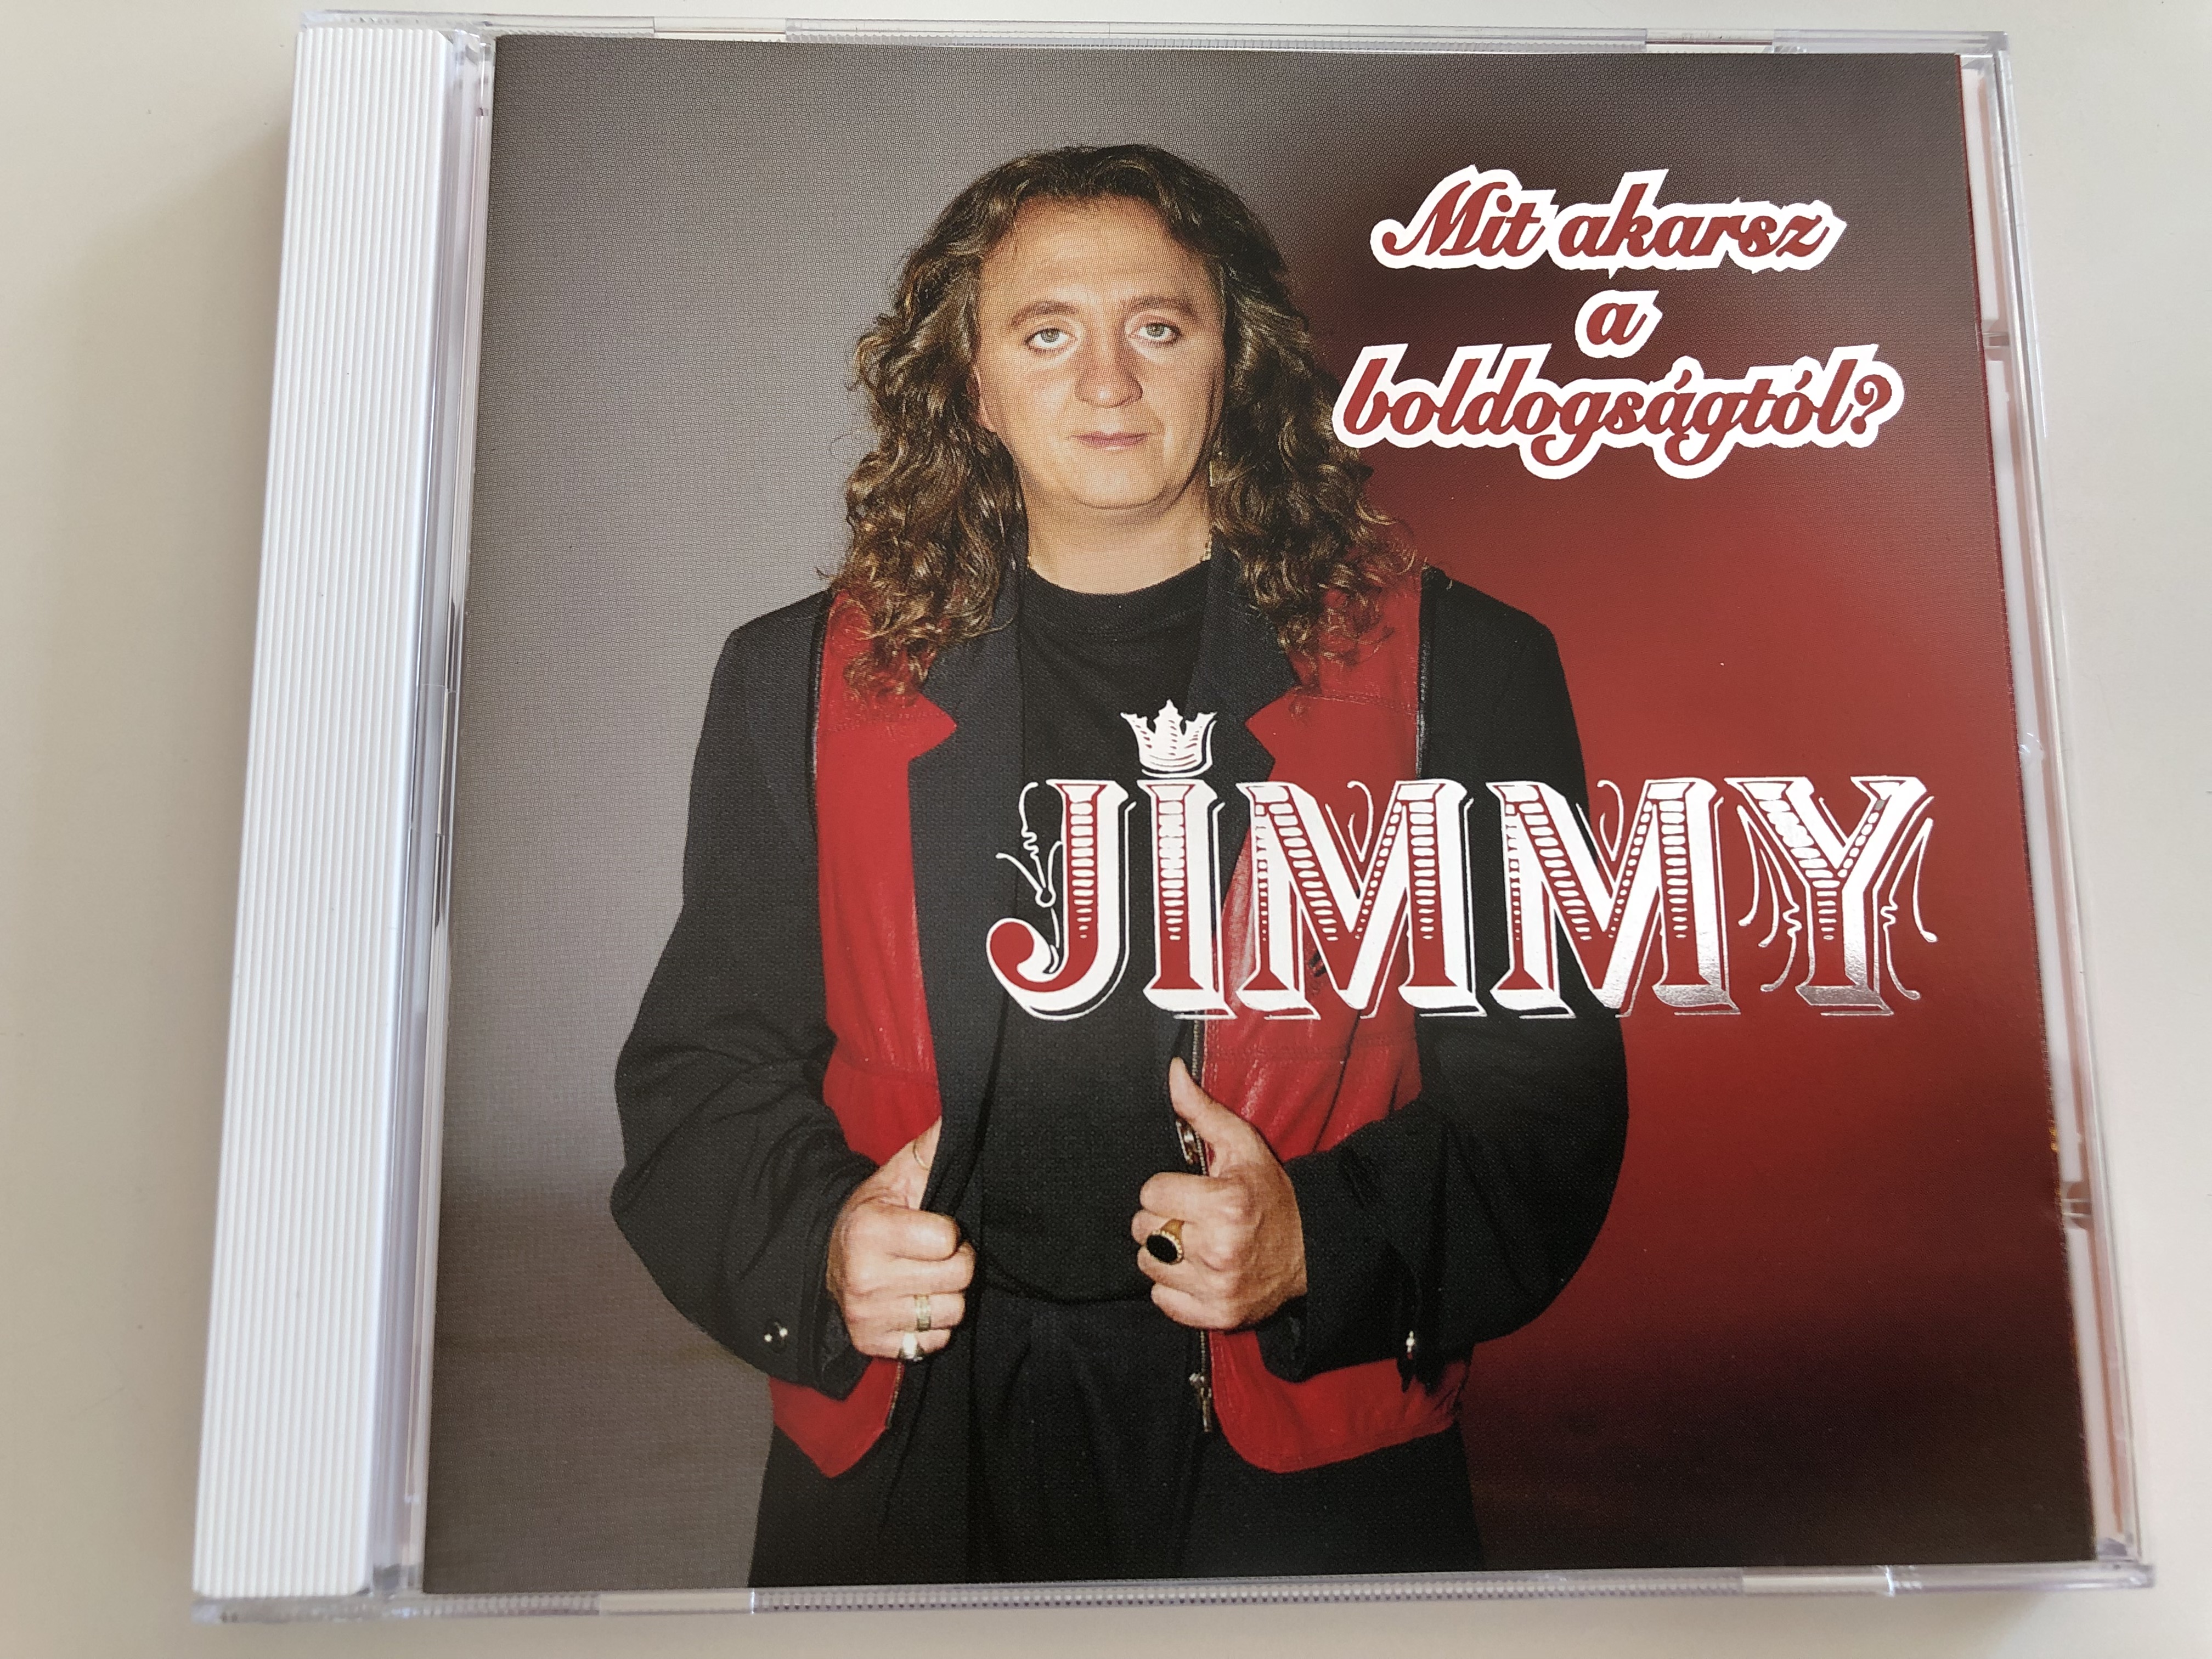 jimmy-mit-akarsz-a-boldogs-gt-l-engedj-el-bukott-di-k-ha-ti-d-lesz-jobb-volt-gy-magneoton-audio-cd-1996-1-.jpg